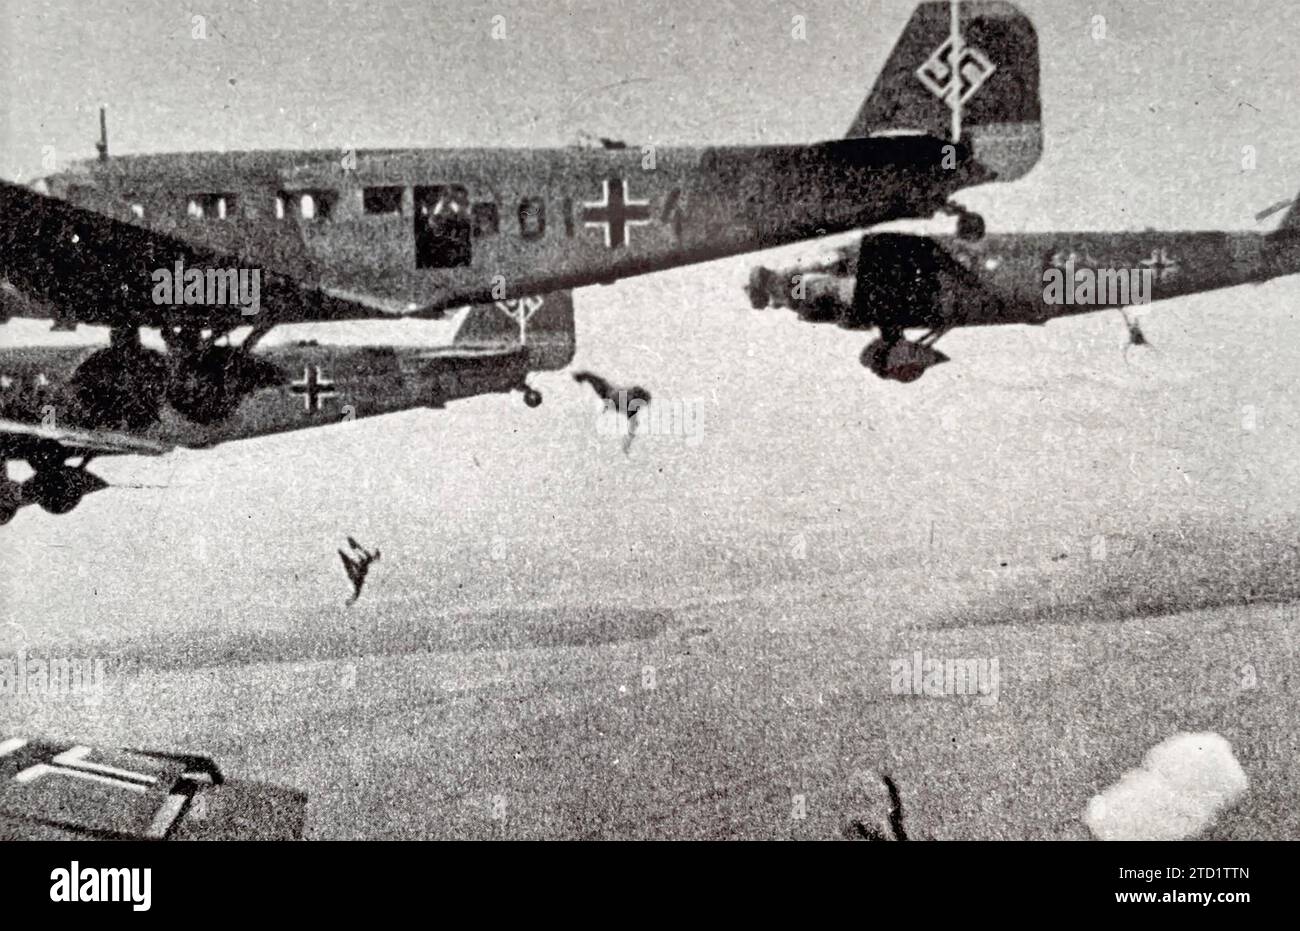 LUFTWAFFE  Fallschirmjäger (parchitists) dropping from Junkers Ju-52 aircraft about 1940 Stock Photo